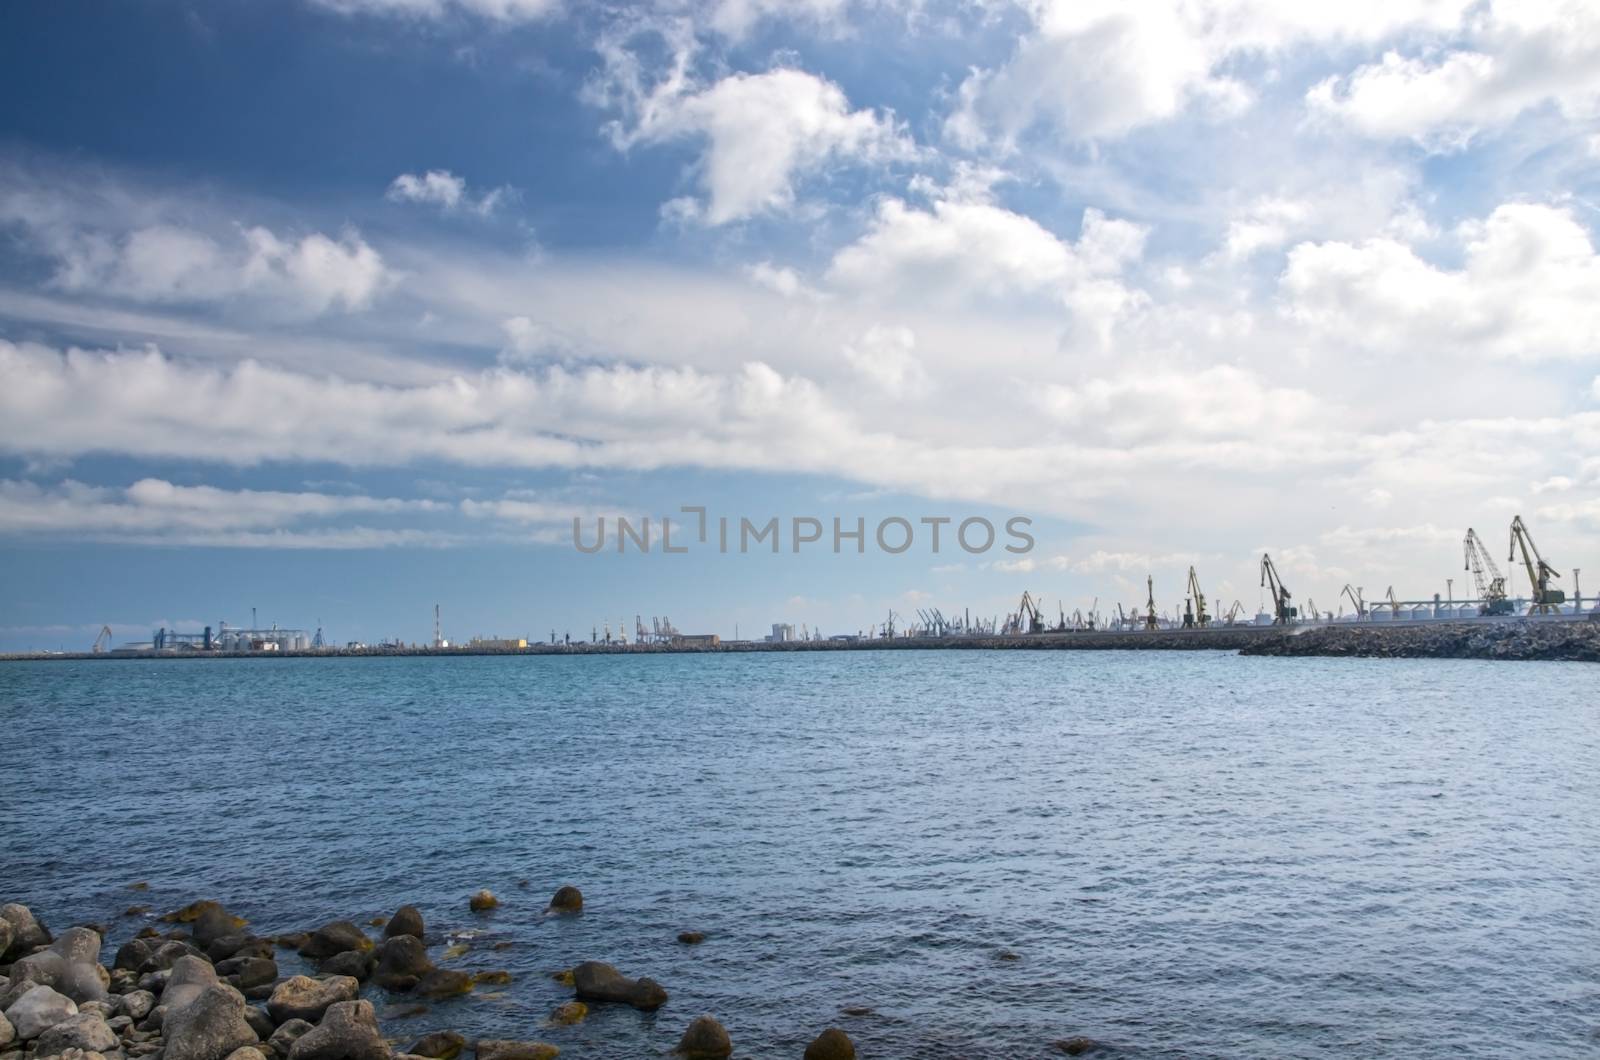 Shipyard In Constanta with big cranes at the horrizon.